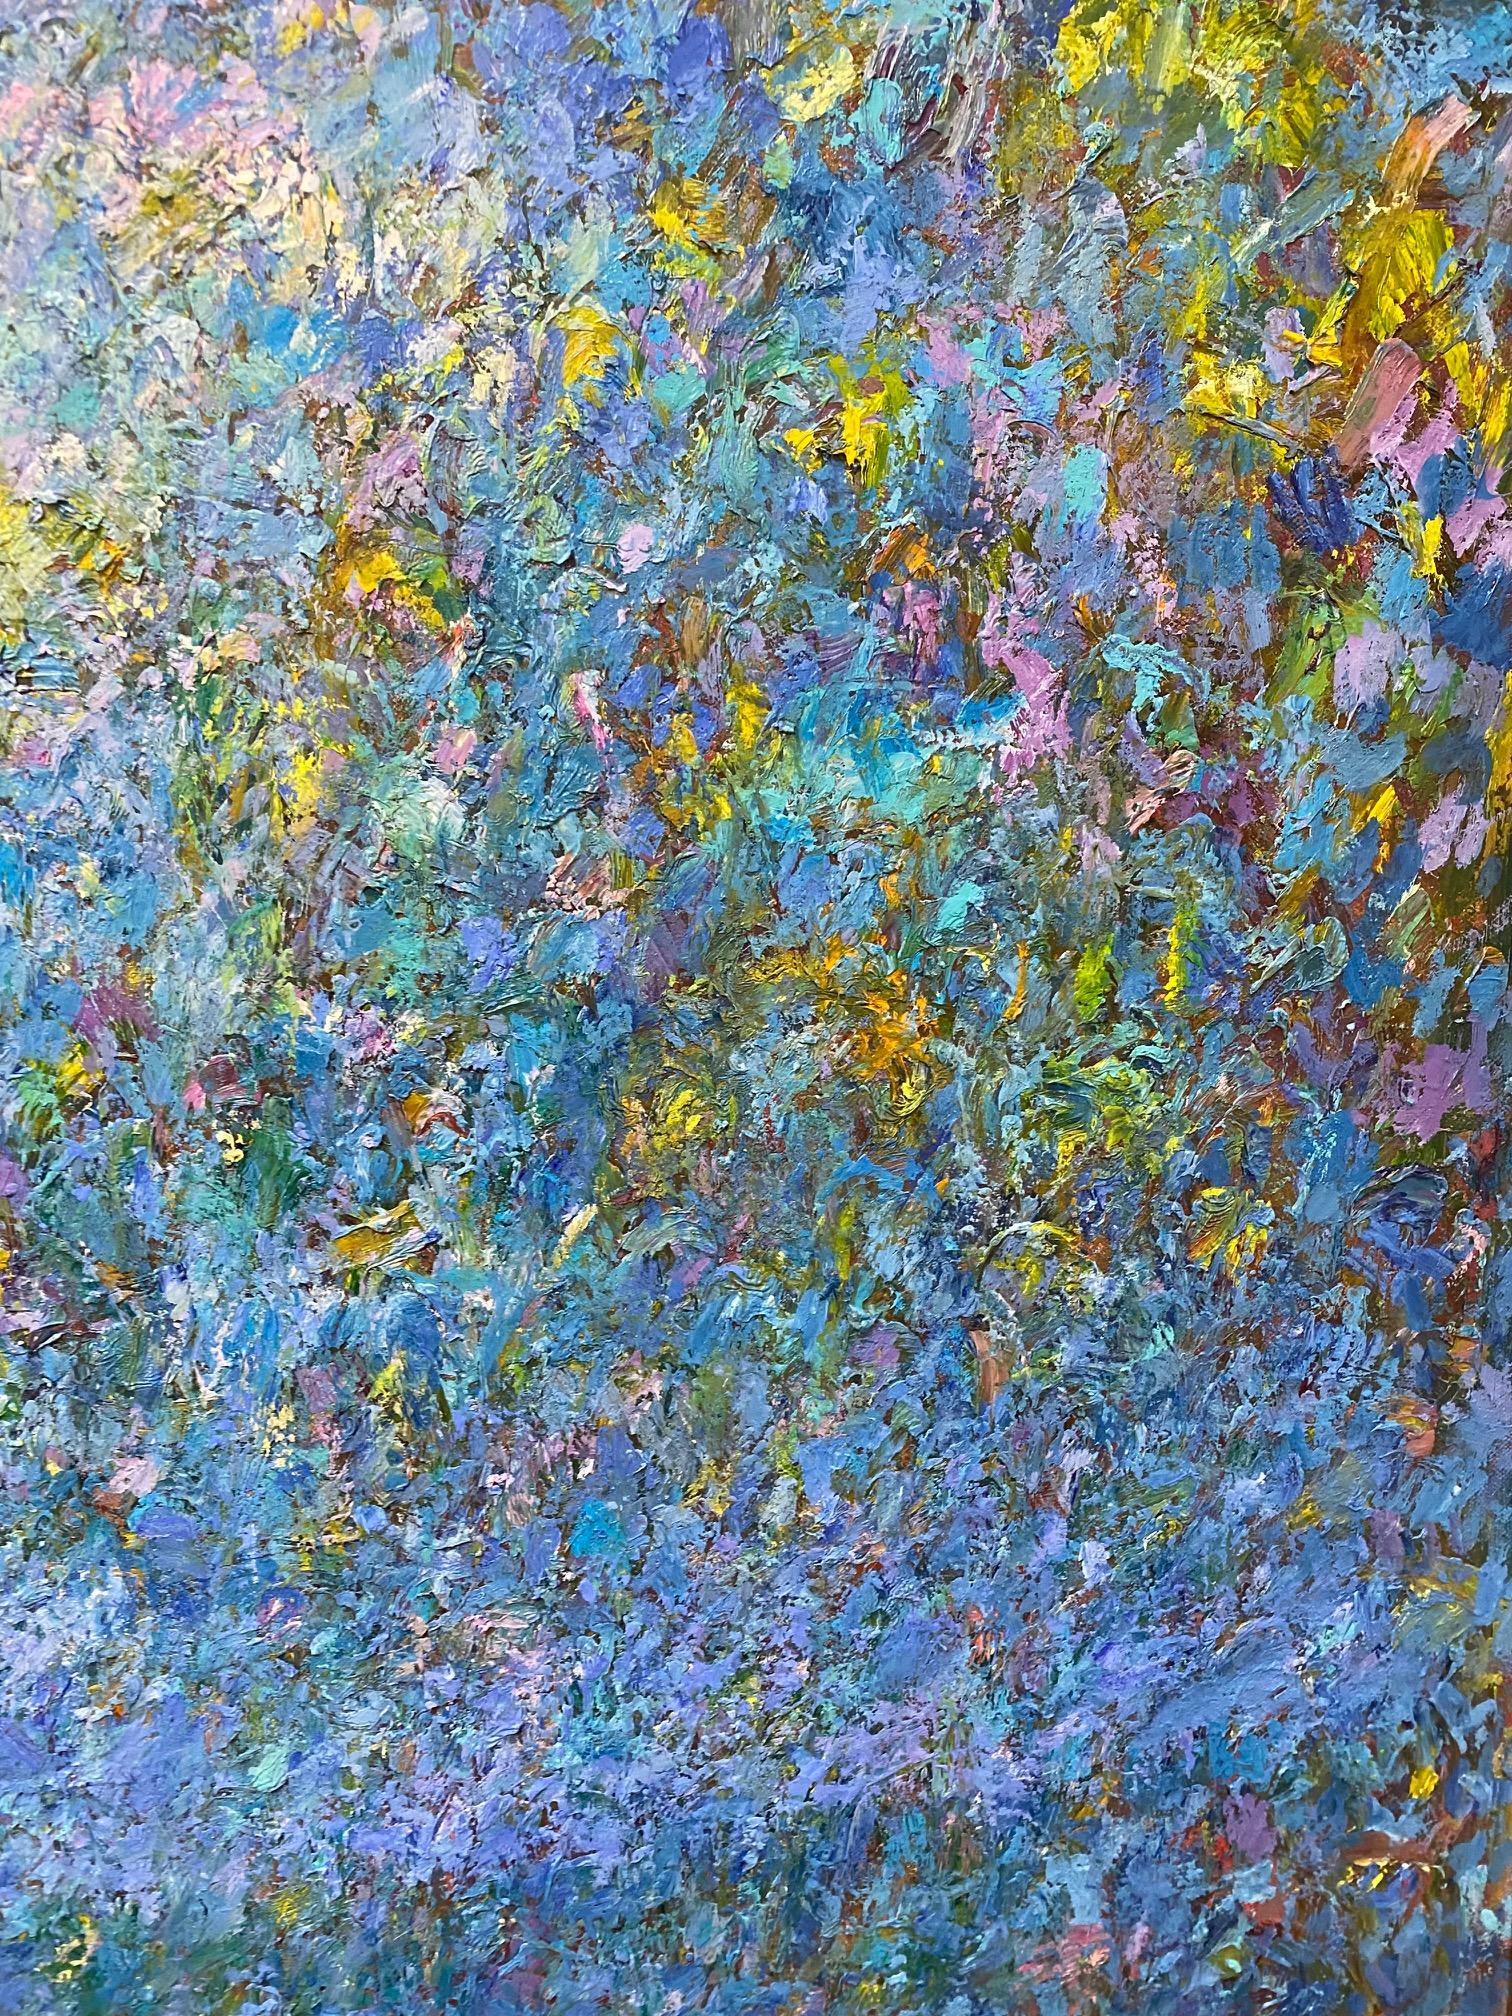 Flourishing Florals, original 30x40 abstract expressionist floral landscape - Abstract Expressionist Painting by Eugene Maziarz